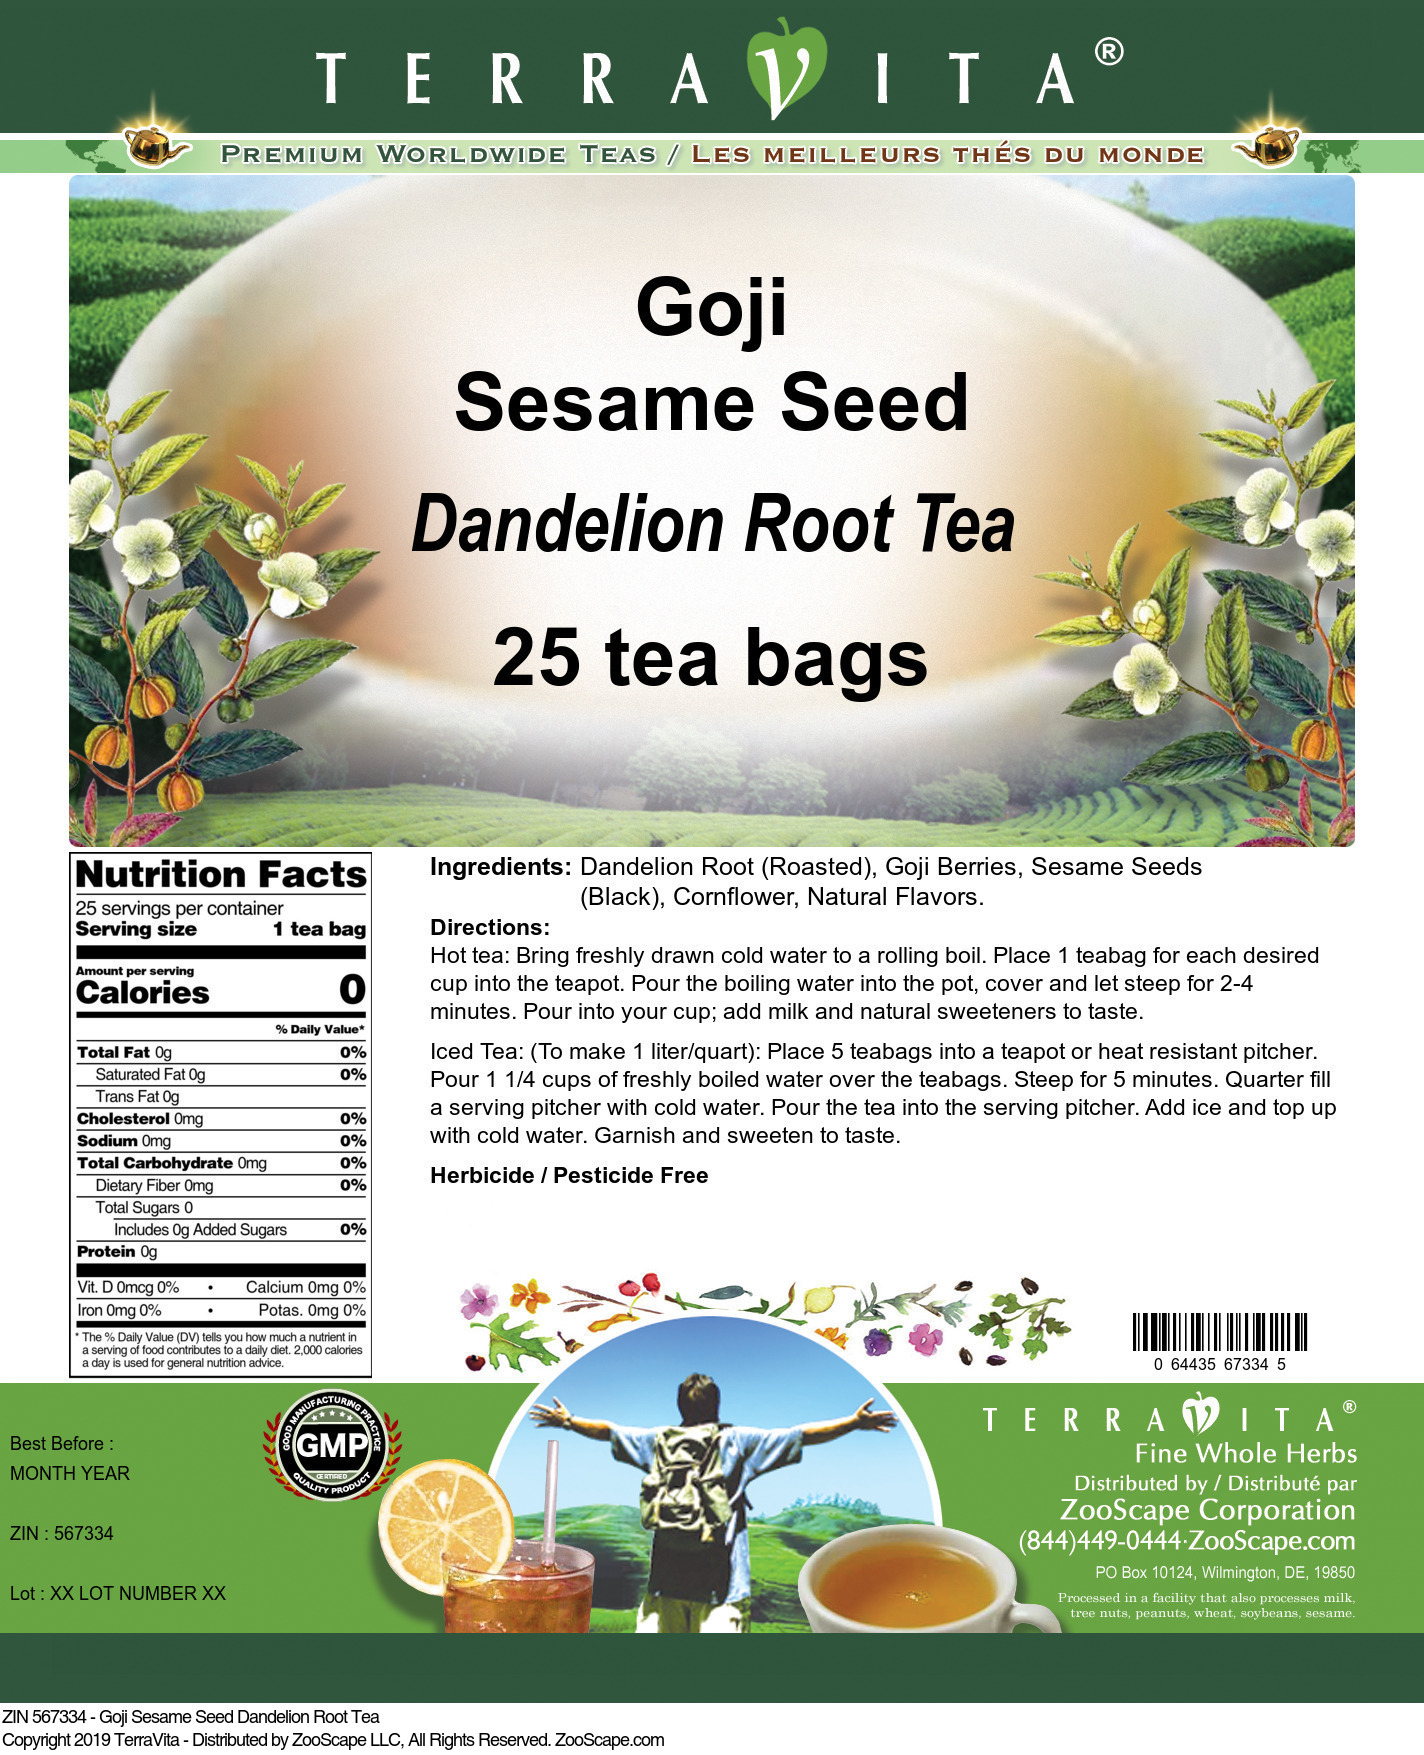 Goji Sesame Seed Dandelion Root Tea - Label